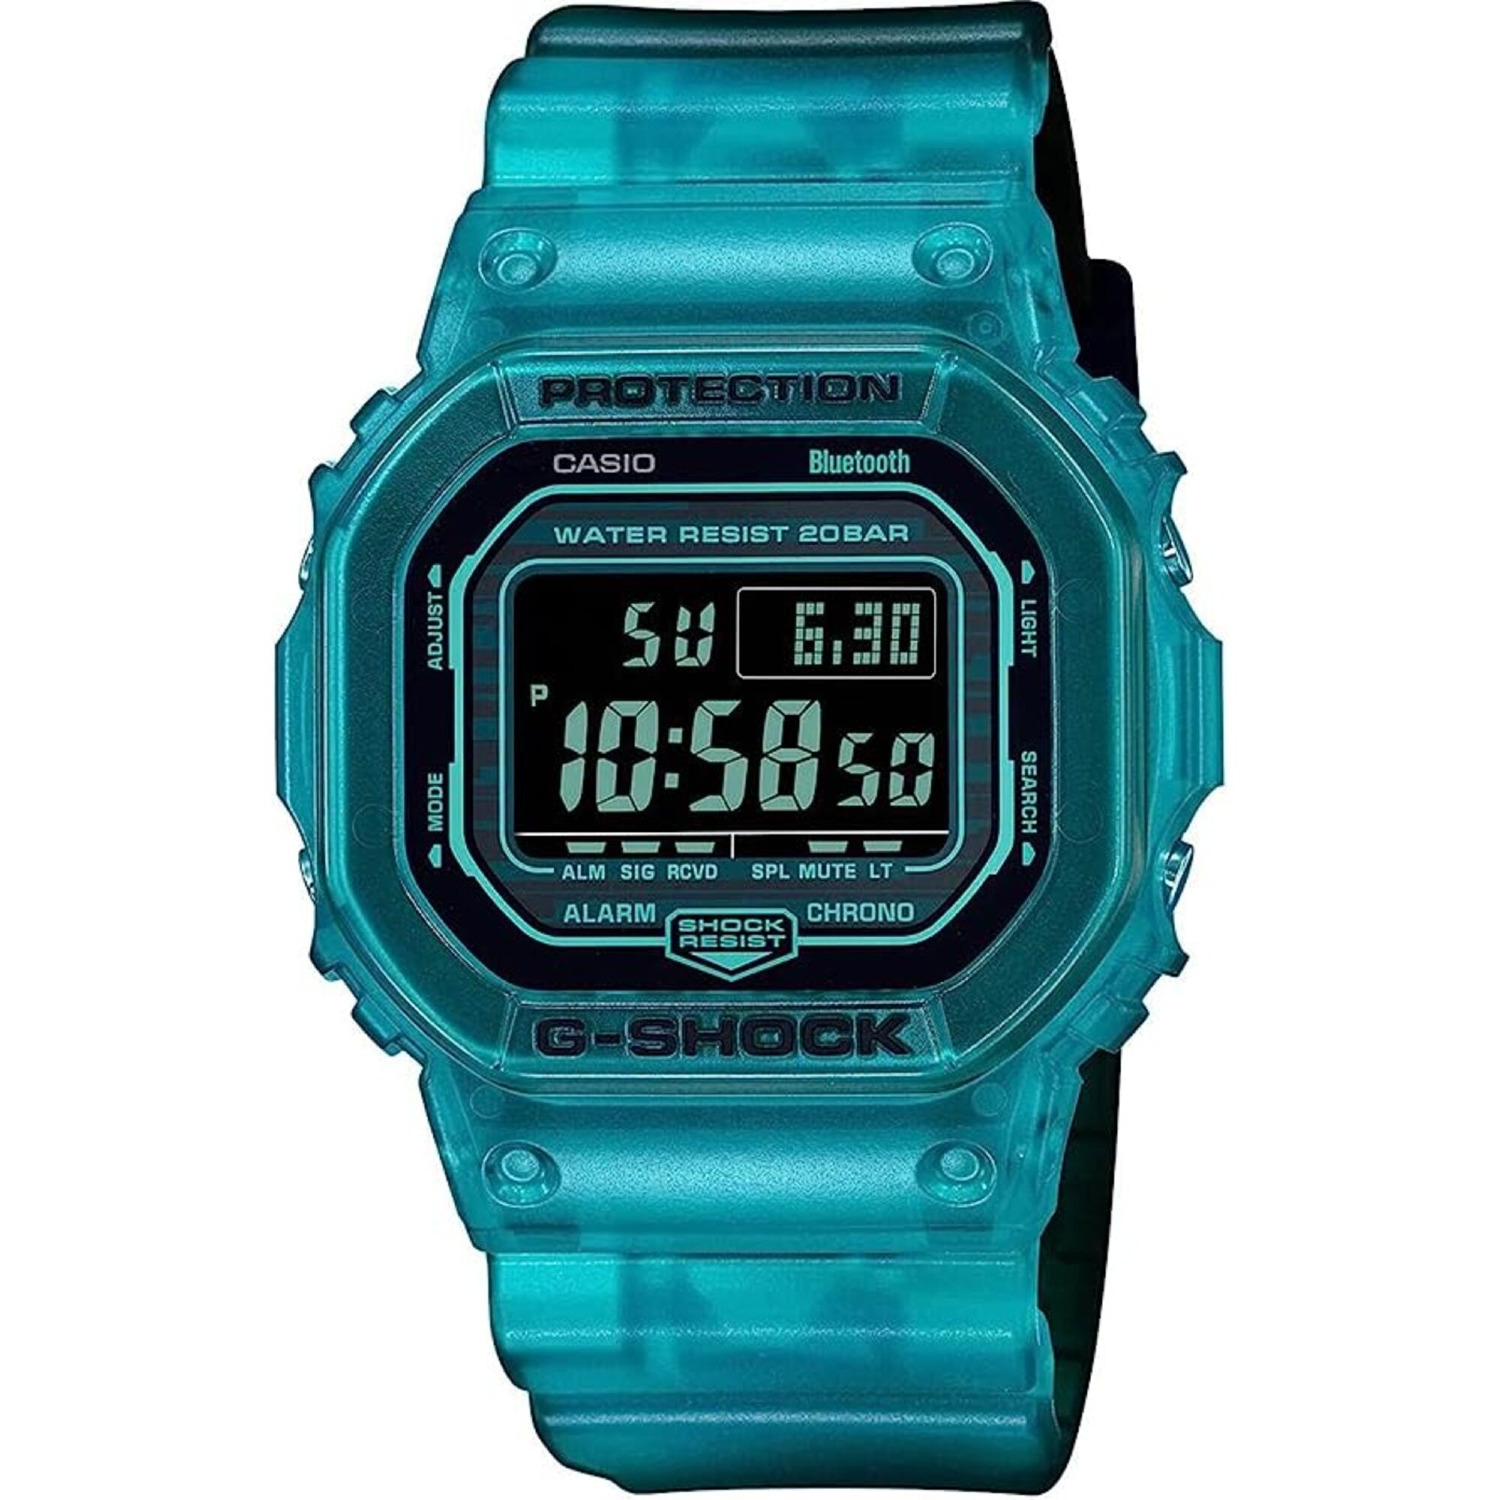 MyGiftStop - Casio Men's Digital Watch - G-Shock Quartz w/Blue & Black Dial & Strap $80 + Free Shipping